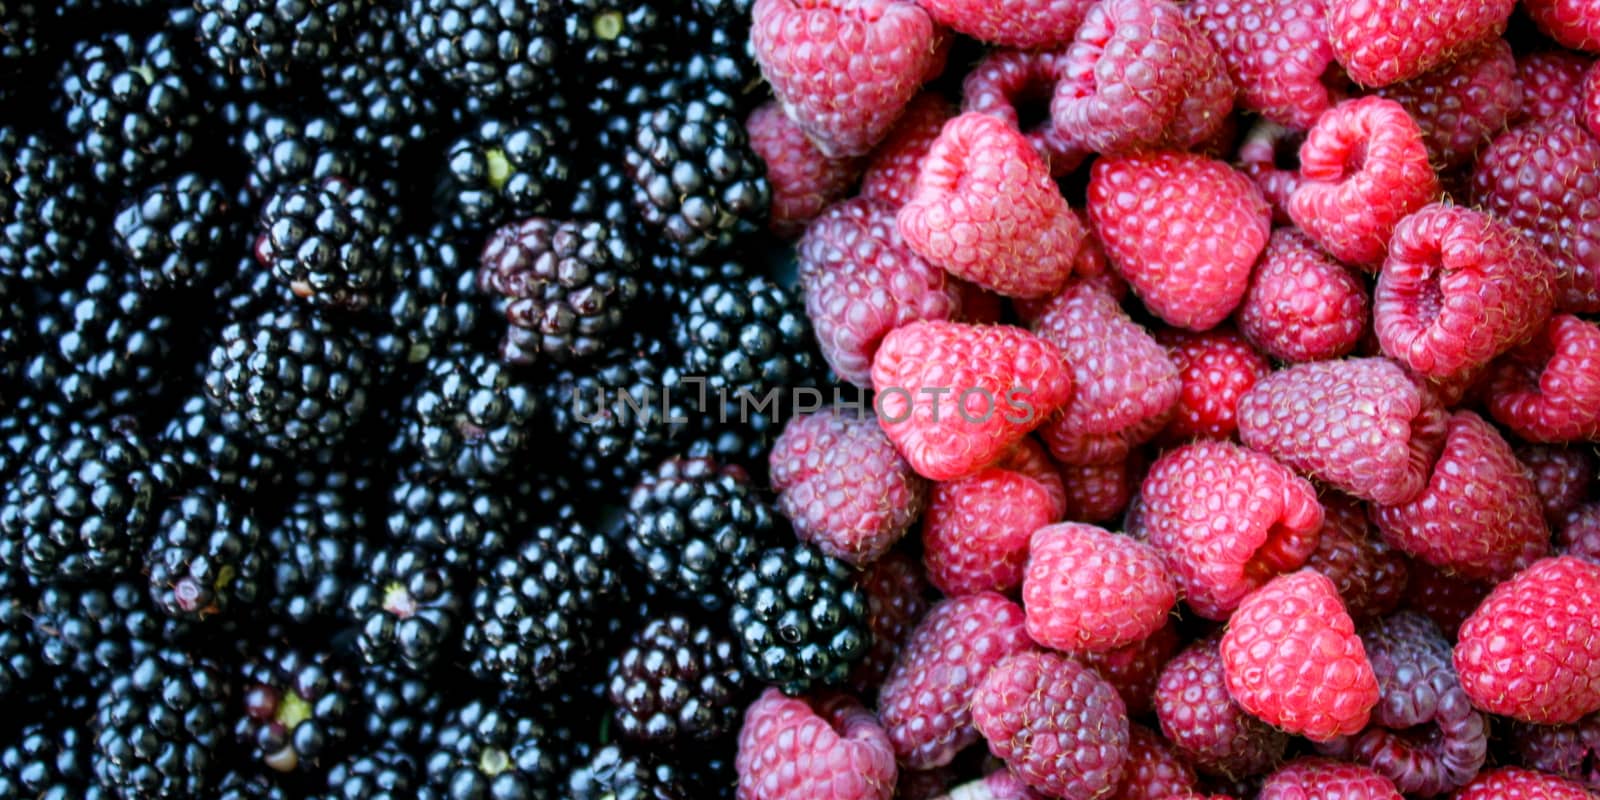 Banner. Top view. Full frame of blackberries and raspberries. by mahirrov